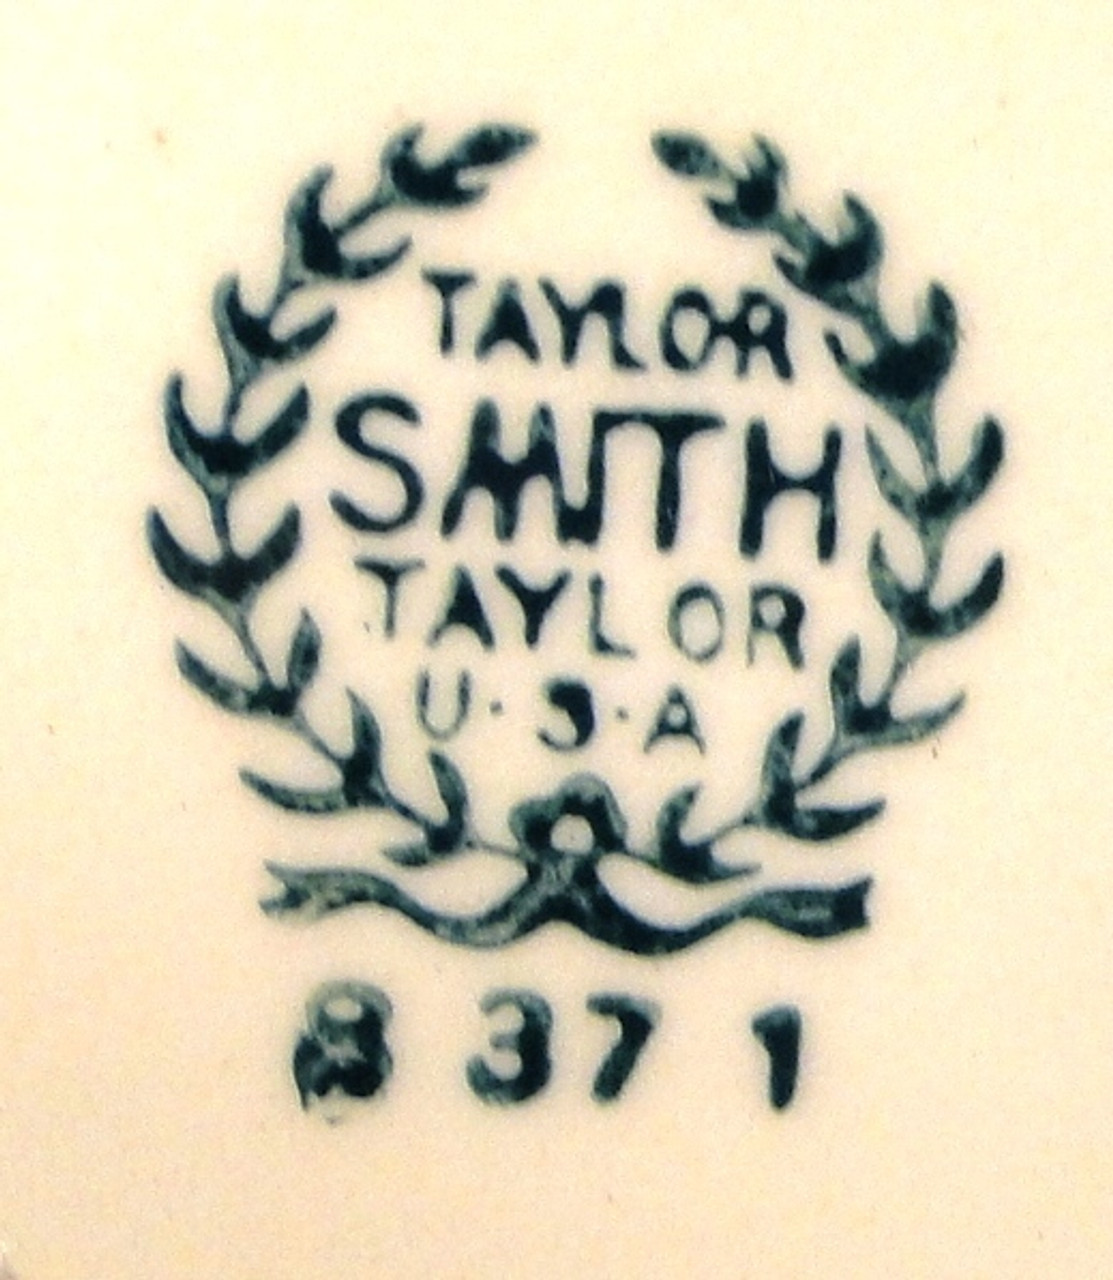 Taylor Smith Taylor 